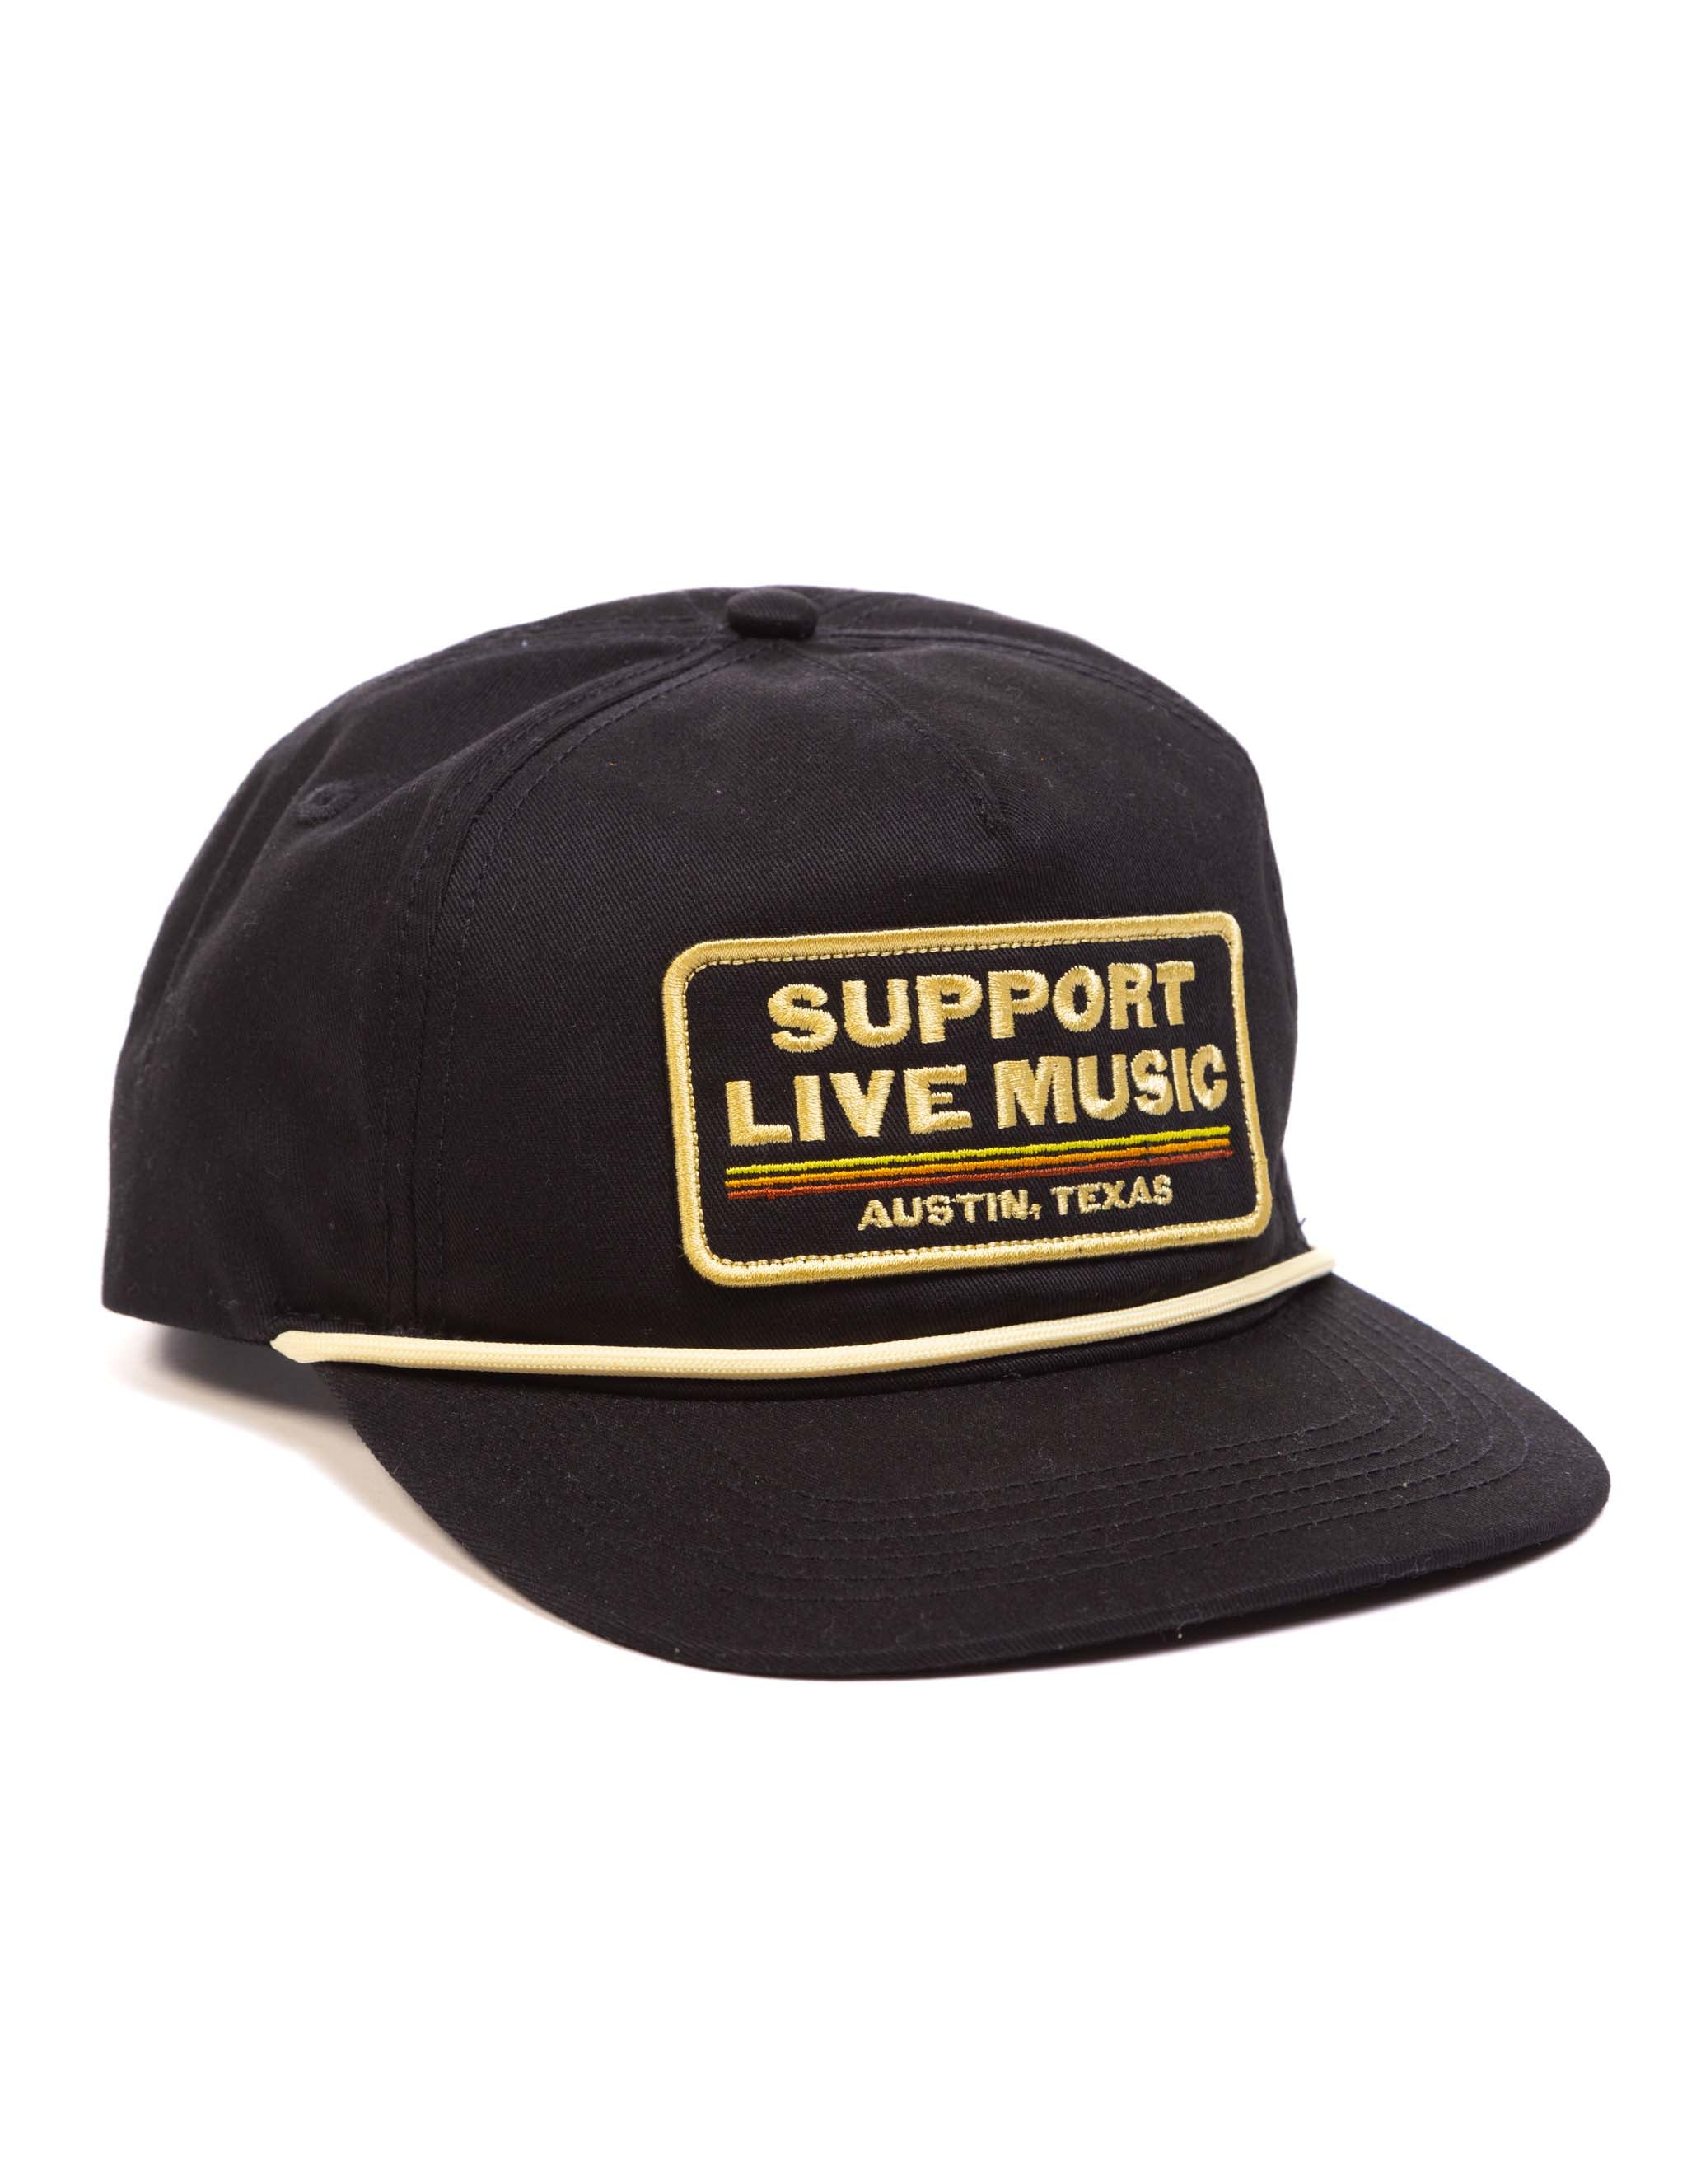 Austin Texas Support Live Music Trucker Hat